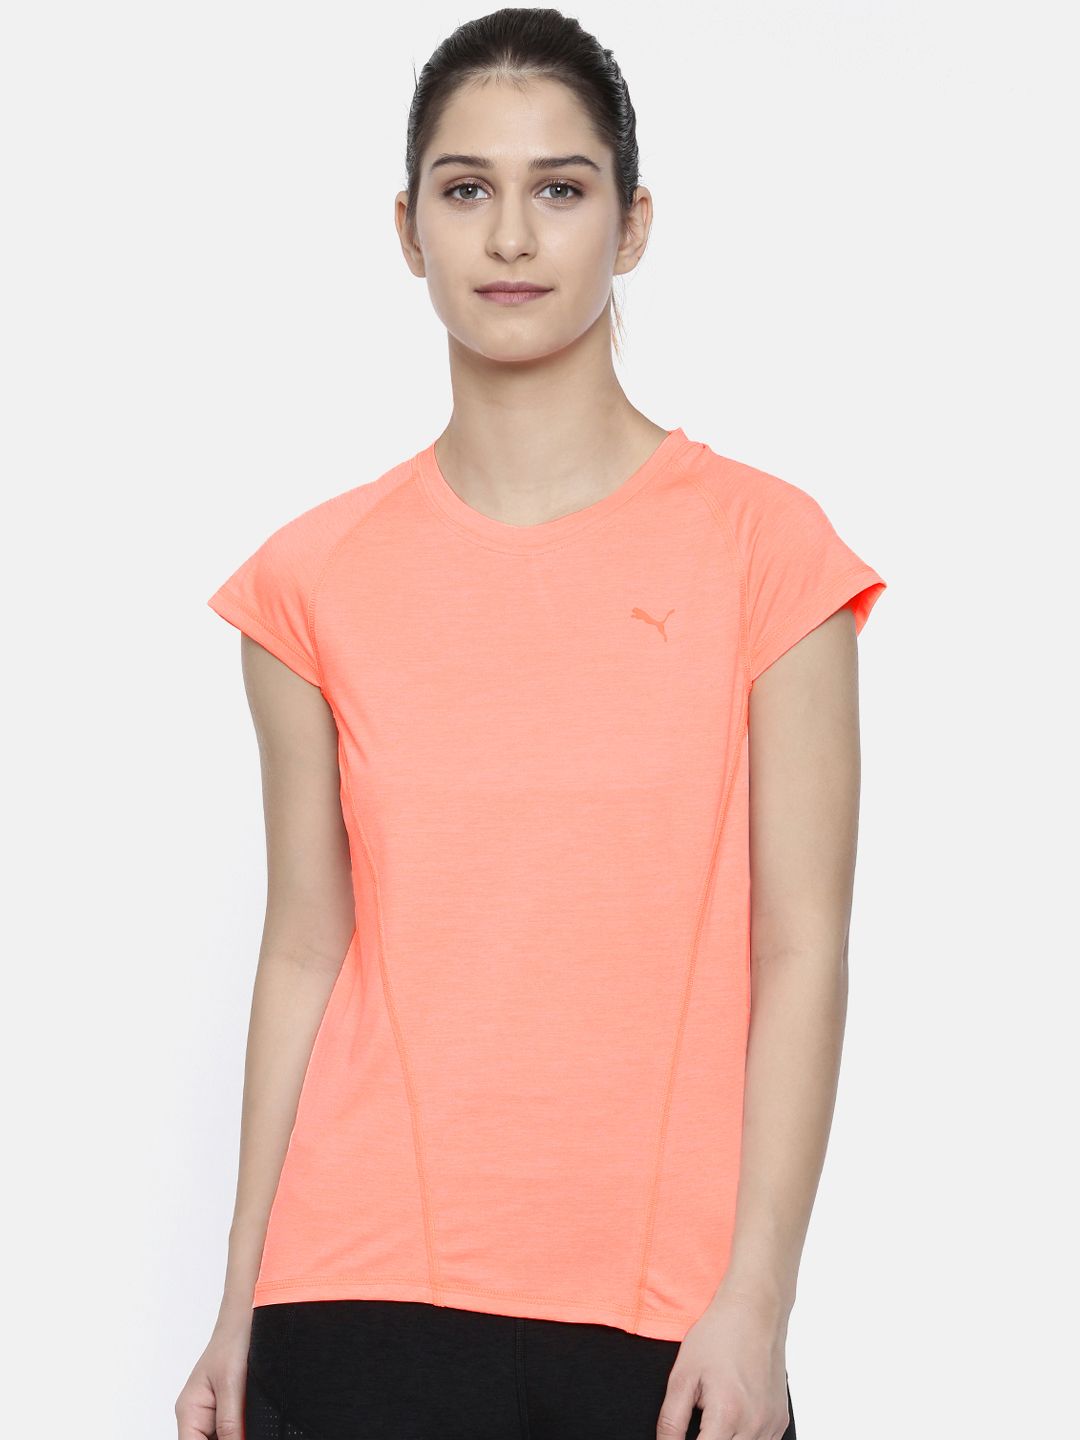 Puma Women Peach-Coloured DeLite Solid Round Neck T-shirt Price in India